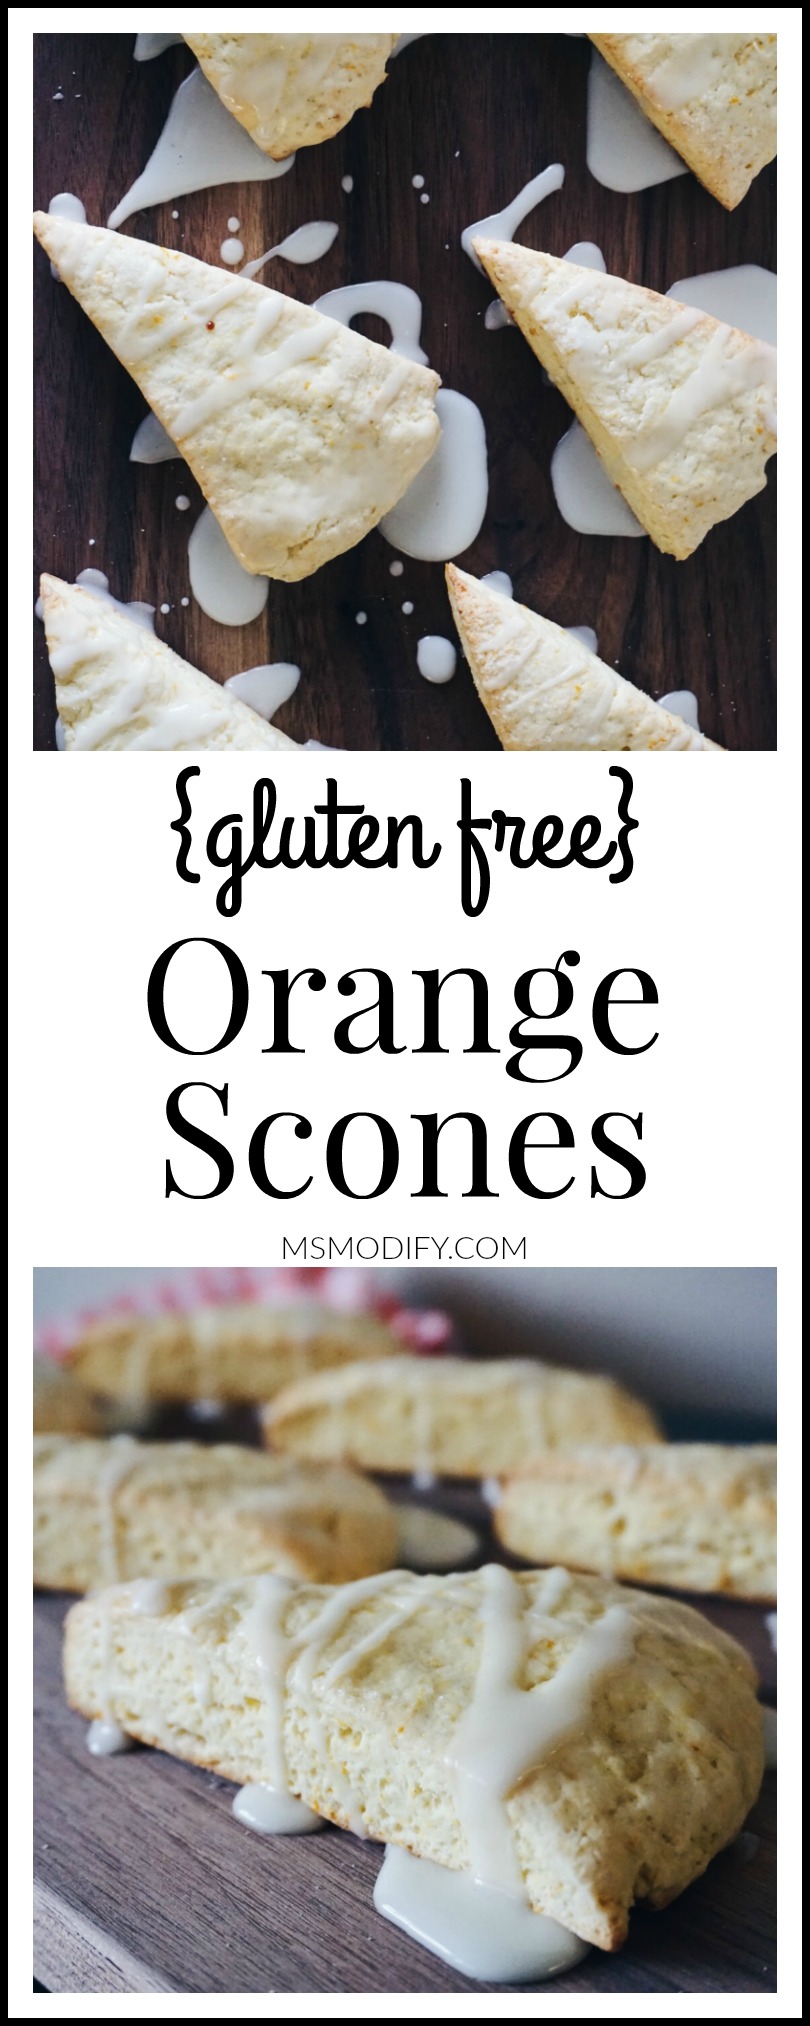 {gluten free} Orange Scones